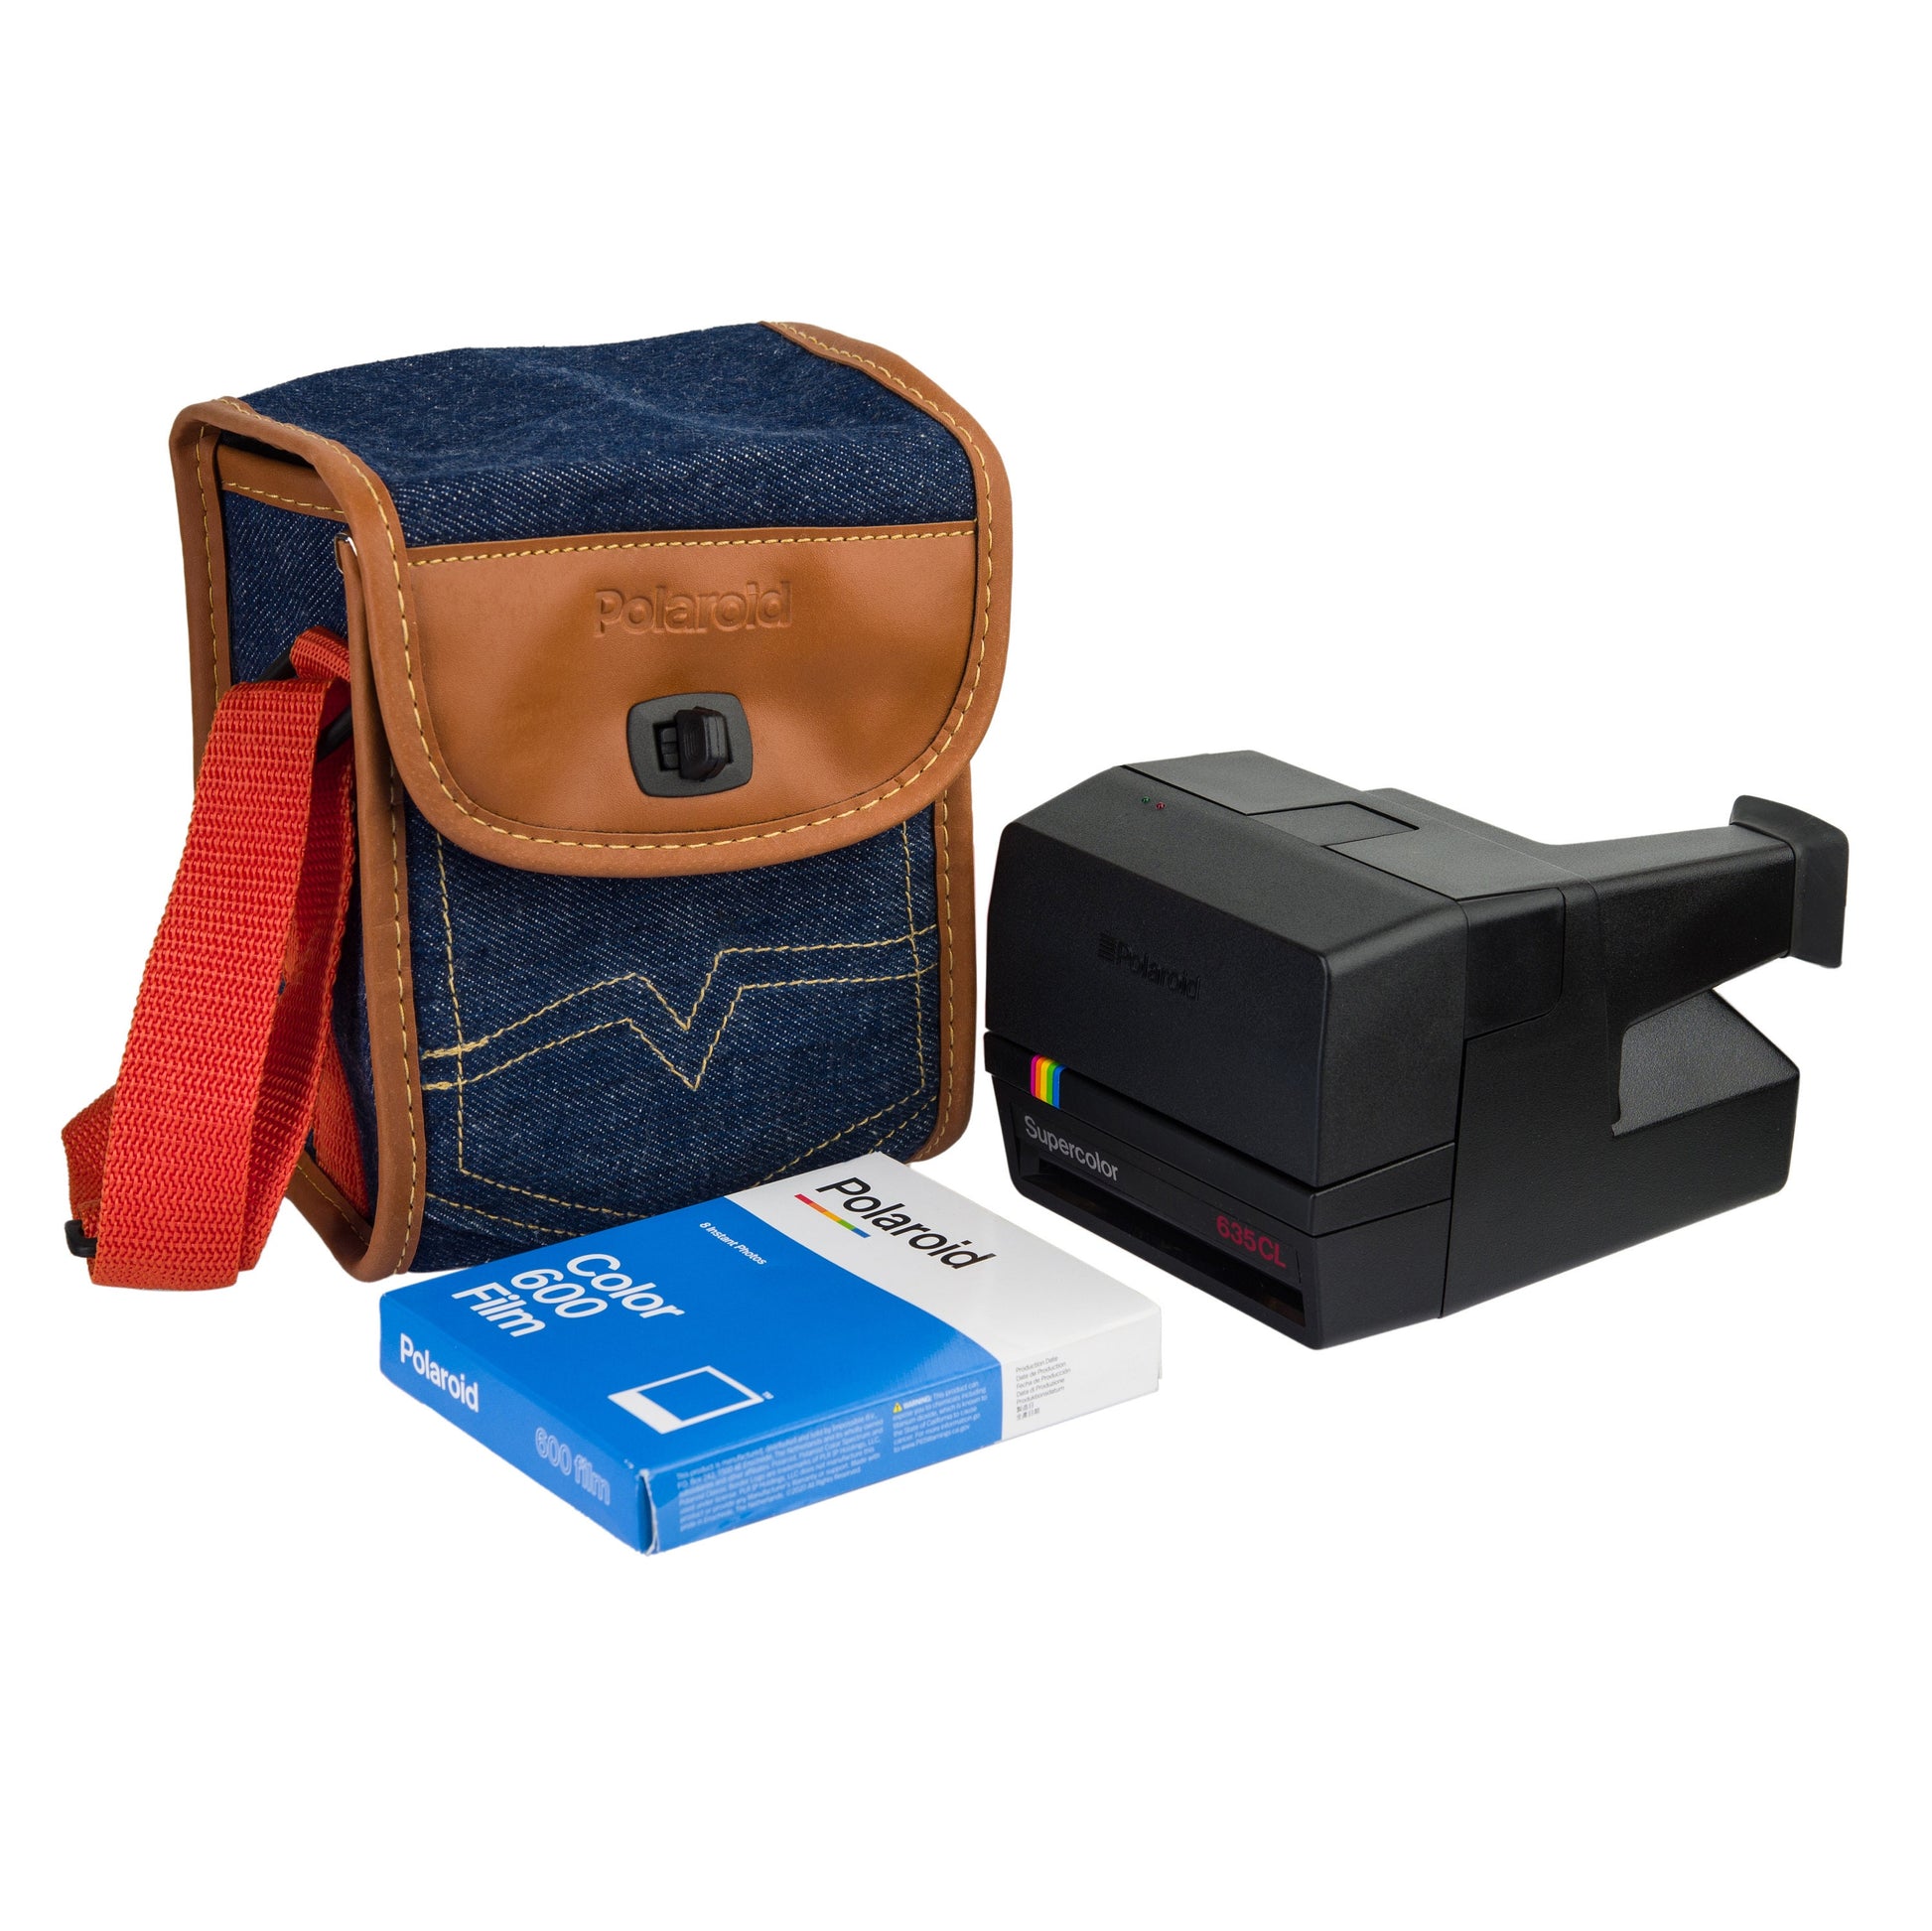 Polaroid Camera Bag, POLAROID Bag, Birthday Gift, Photographer Gift, Denim cloth and faux-leather bag for any 600 type Polaroid camera - Vintage Polaroid Instant Cameras